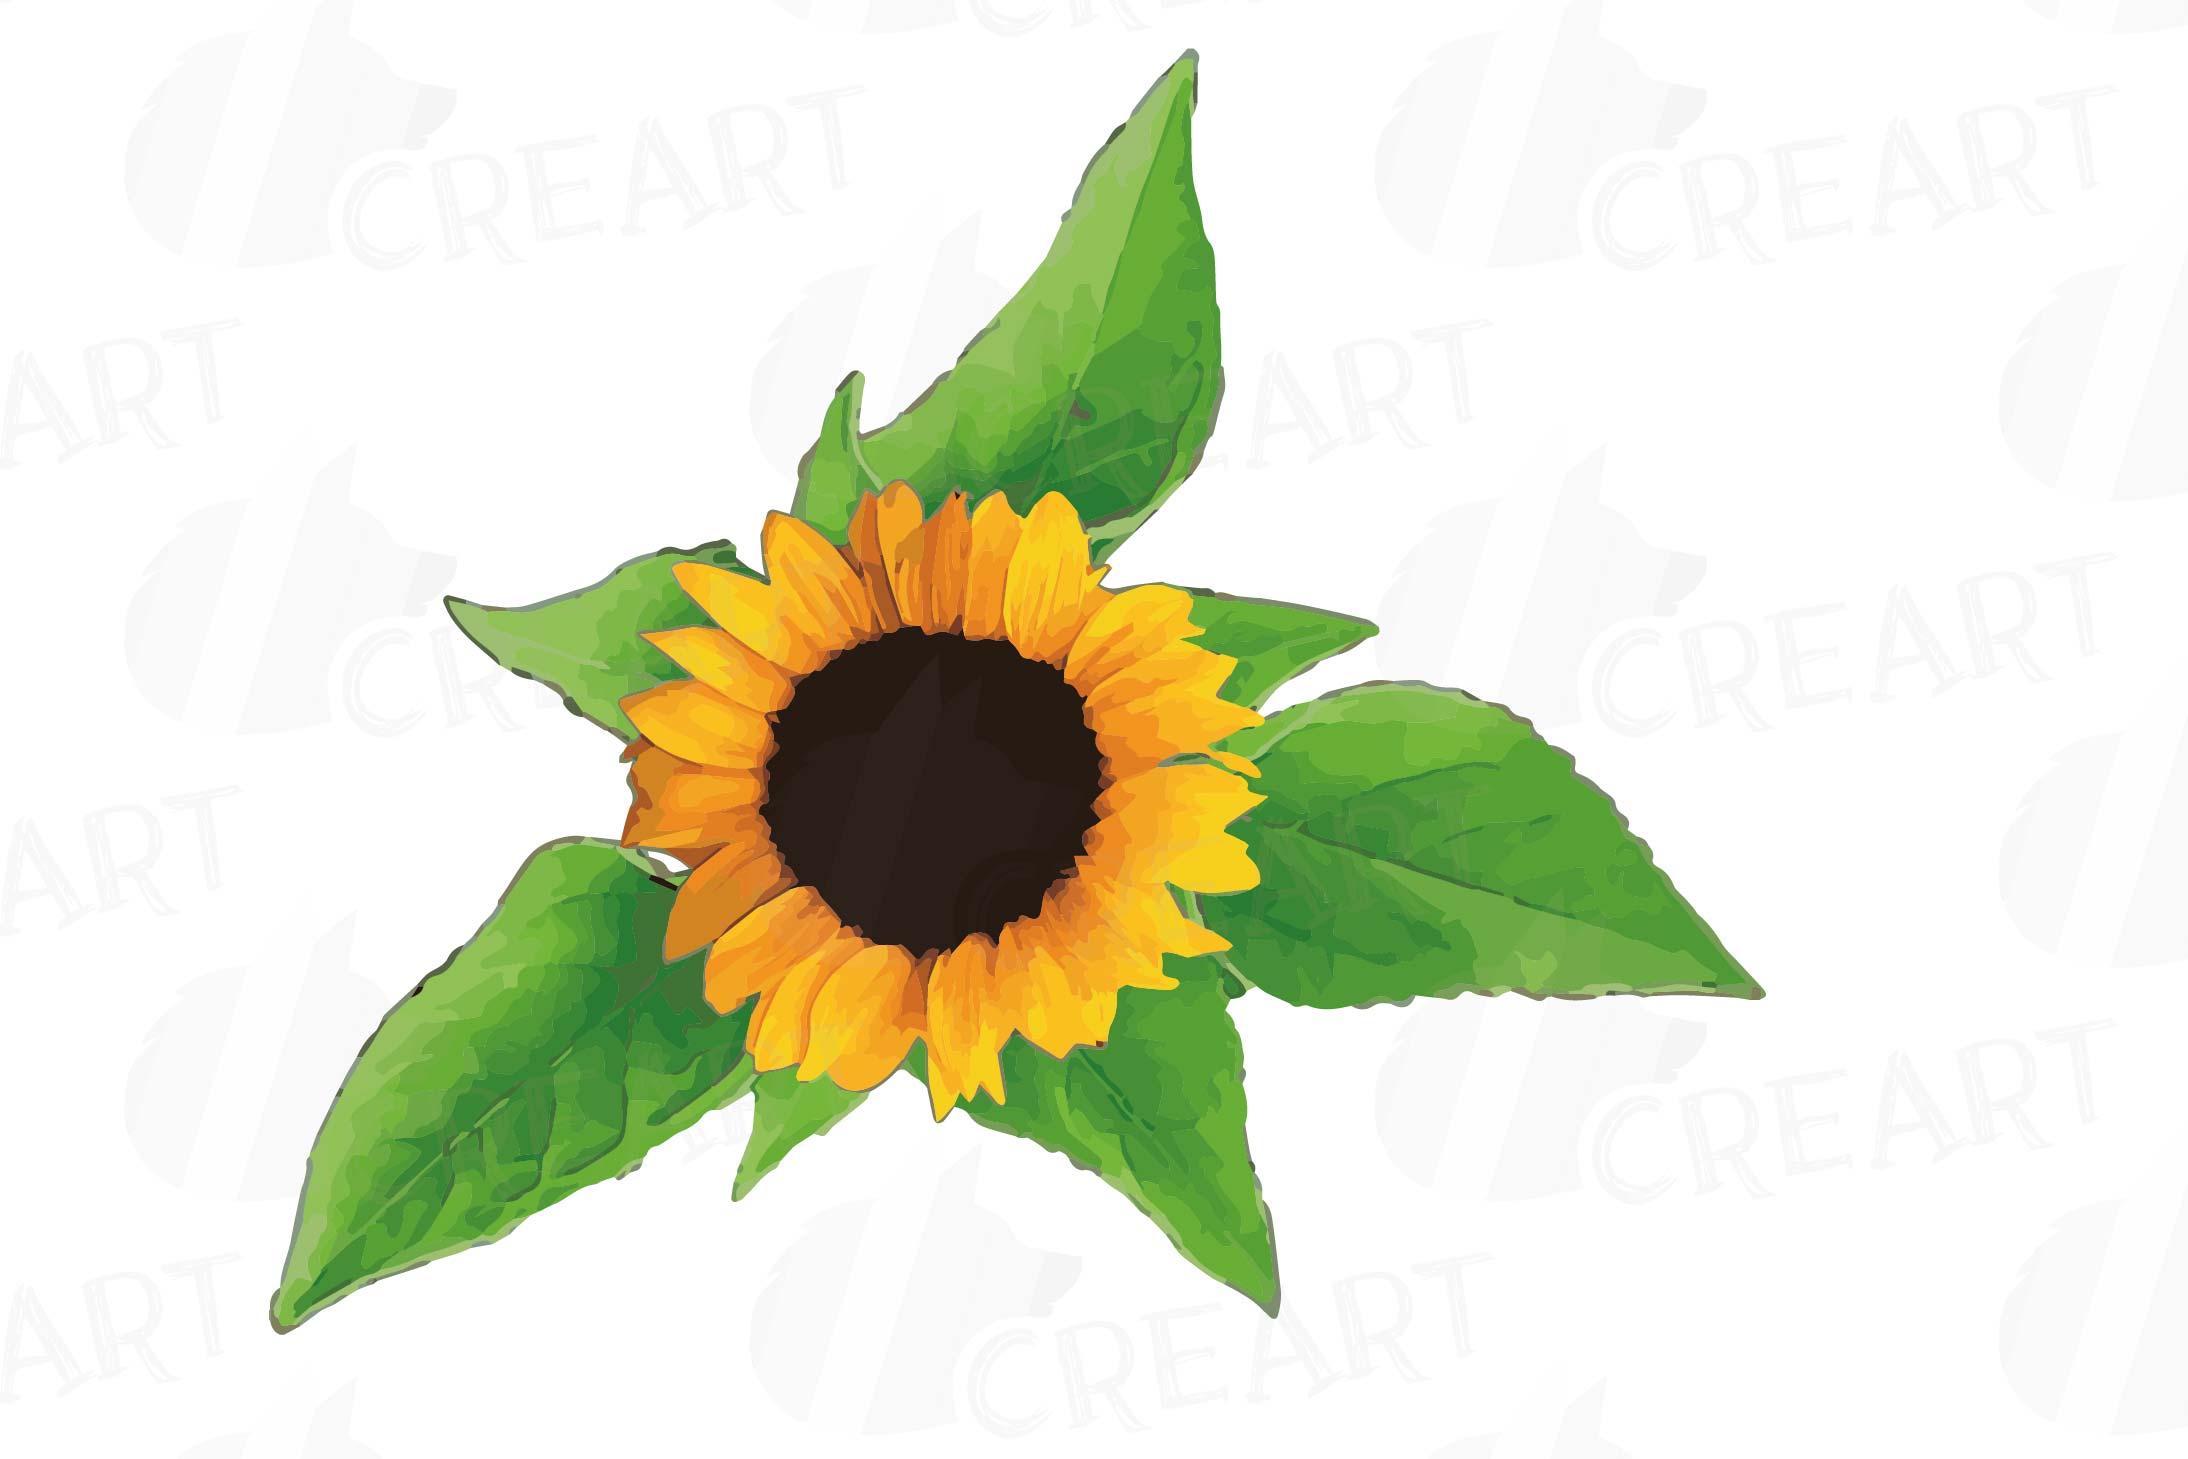 Download Sunflower watercolor clip art pack, watercolor sunflower design elements, floral PNG, jpg, svg ...